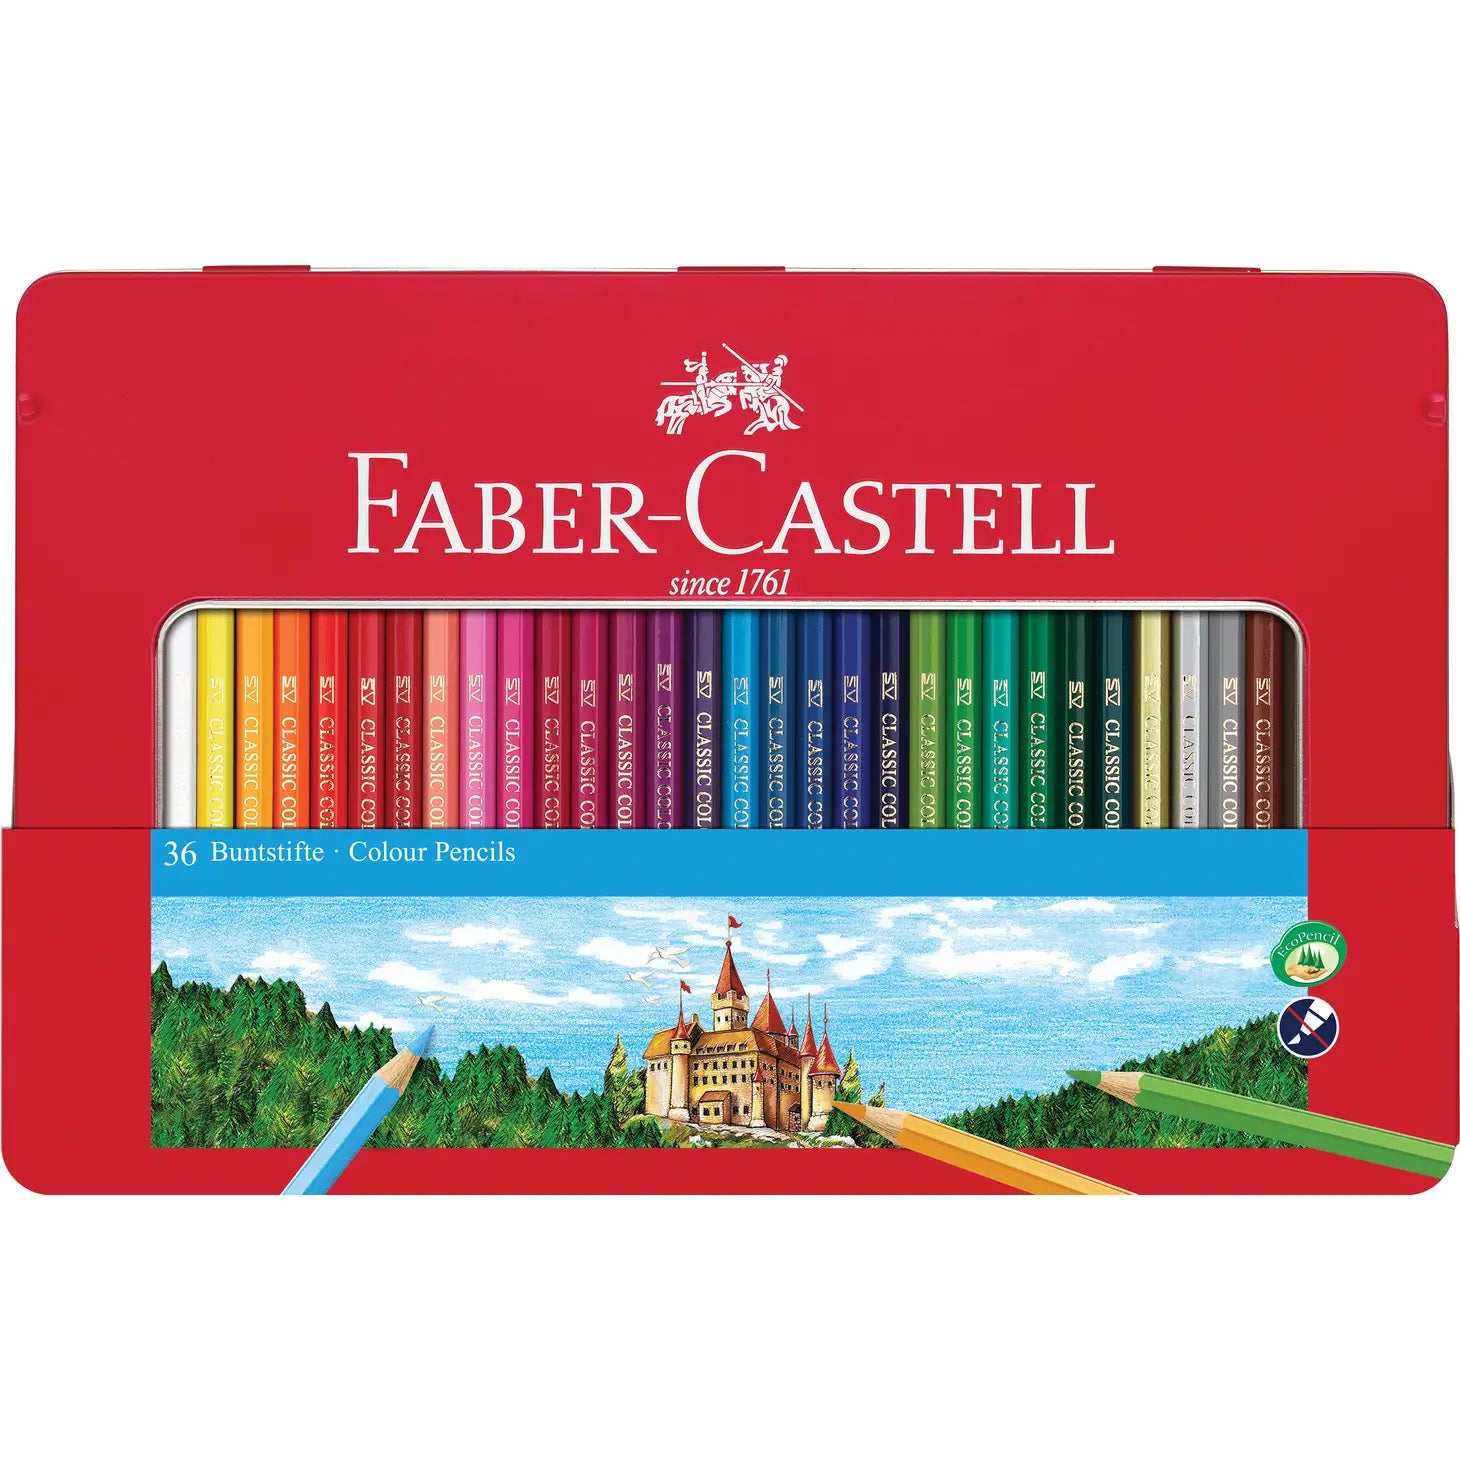 Faber castell Set Of 36 Triangular Pencils Multicolor